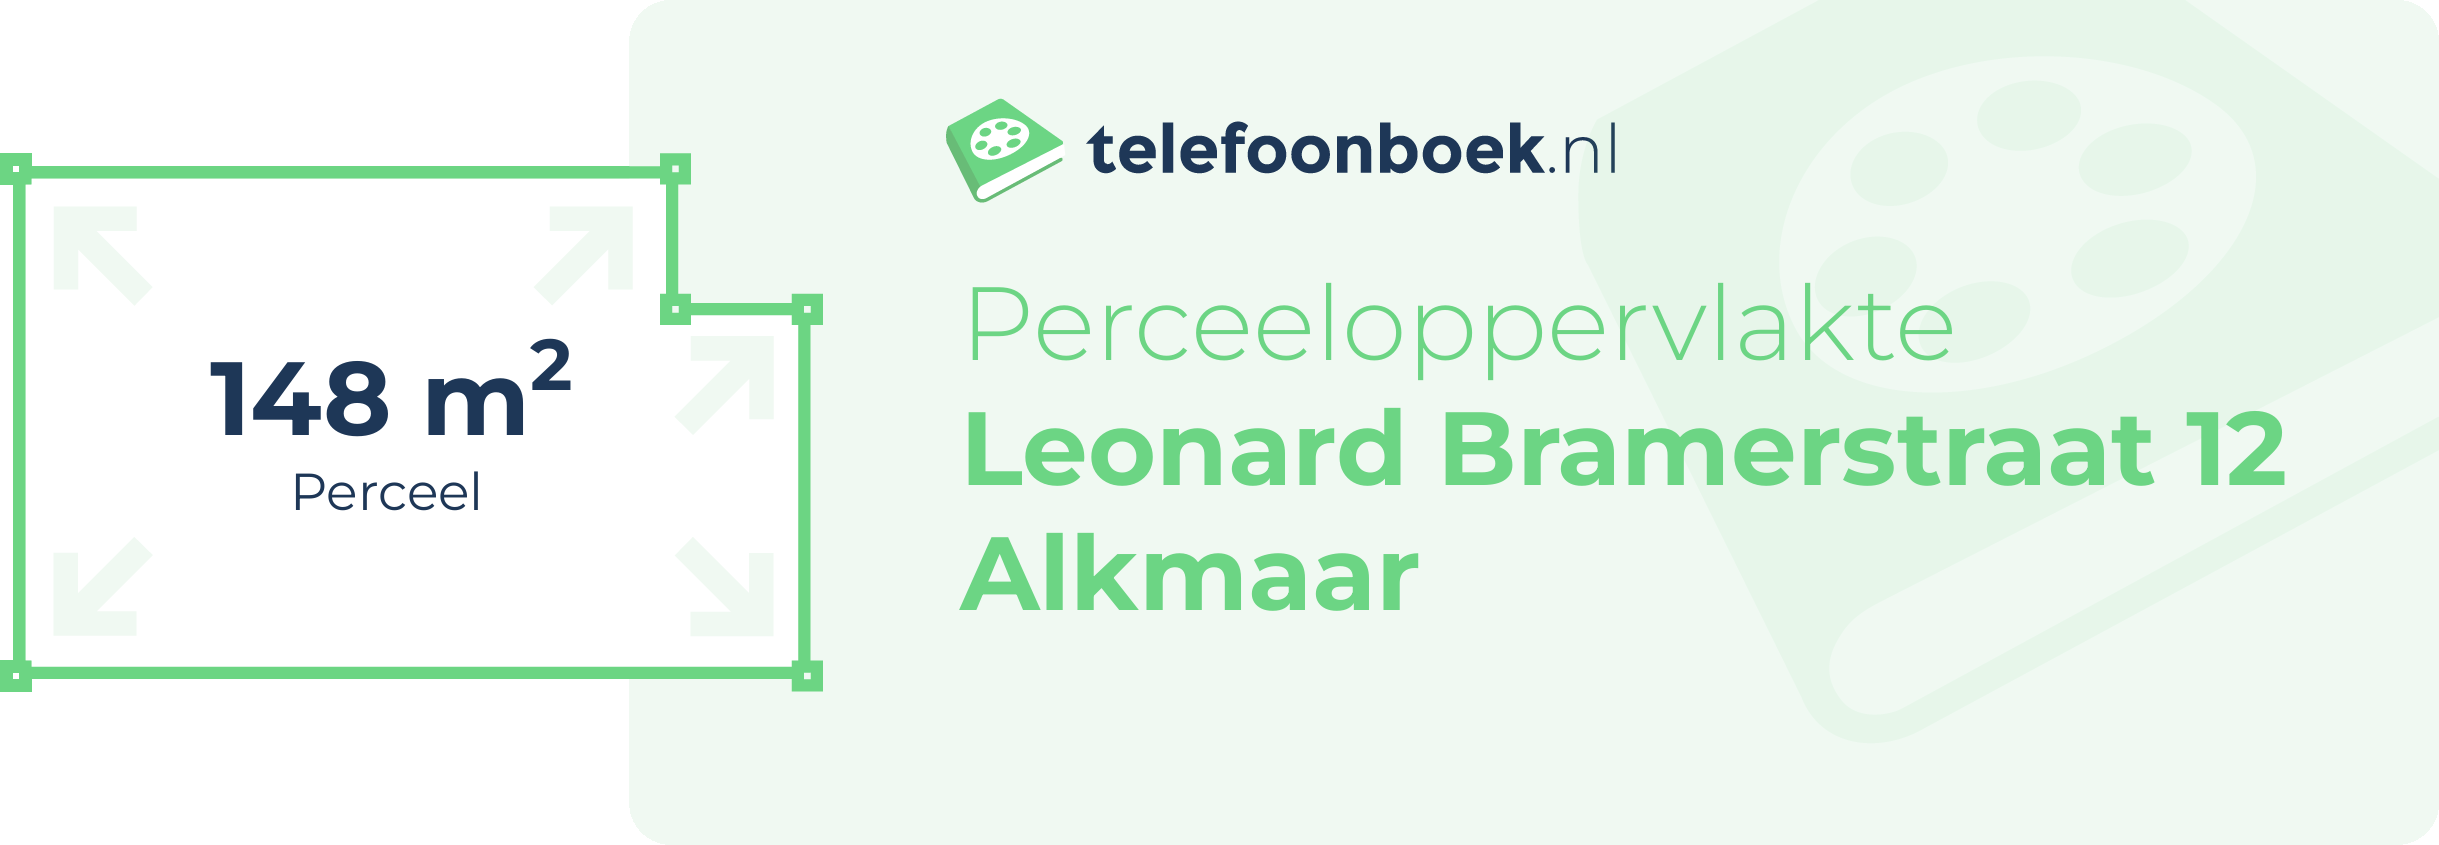 Perceeloppervlakte Leonard Bramerstraat 12 Alkmaar